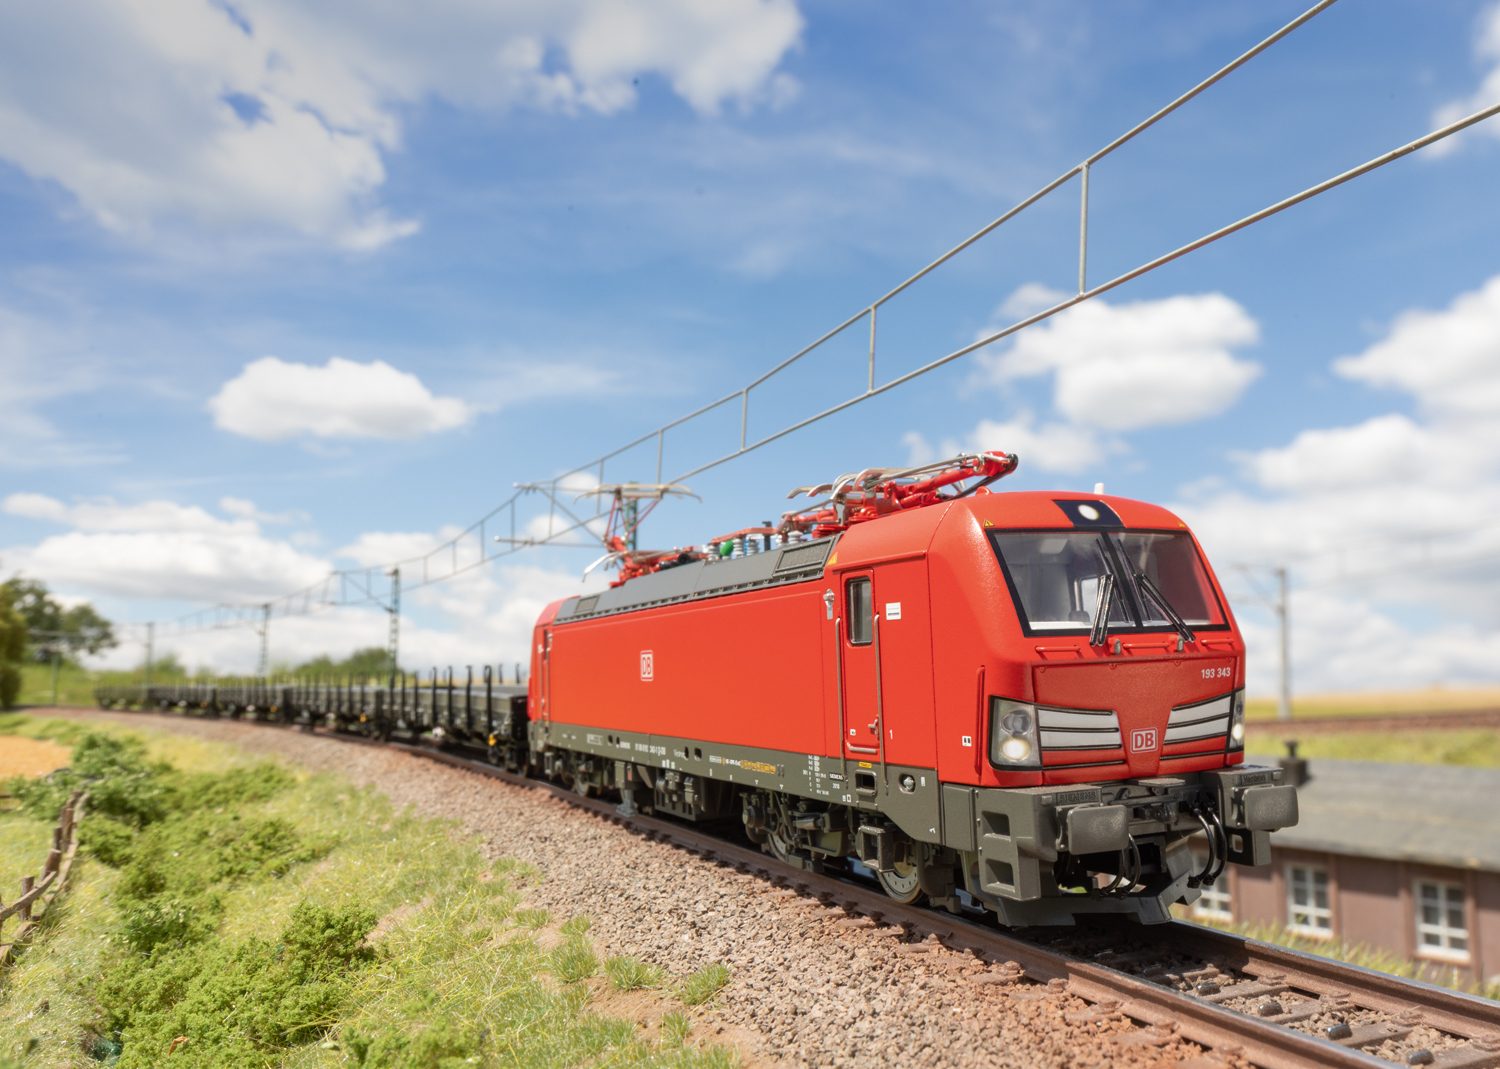 Märklin 39330, EAN 4001883393308: Class 193 Electric Locomotive